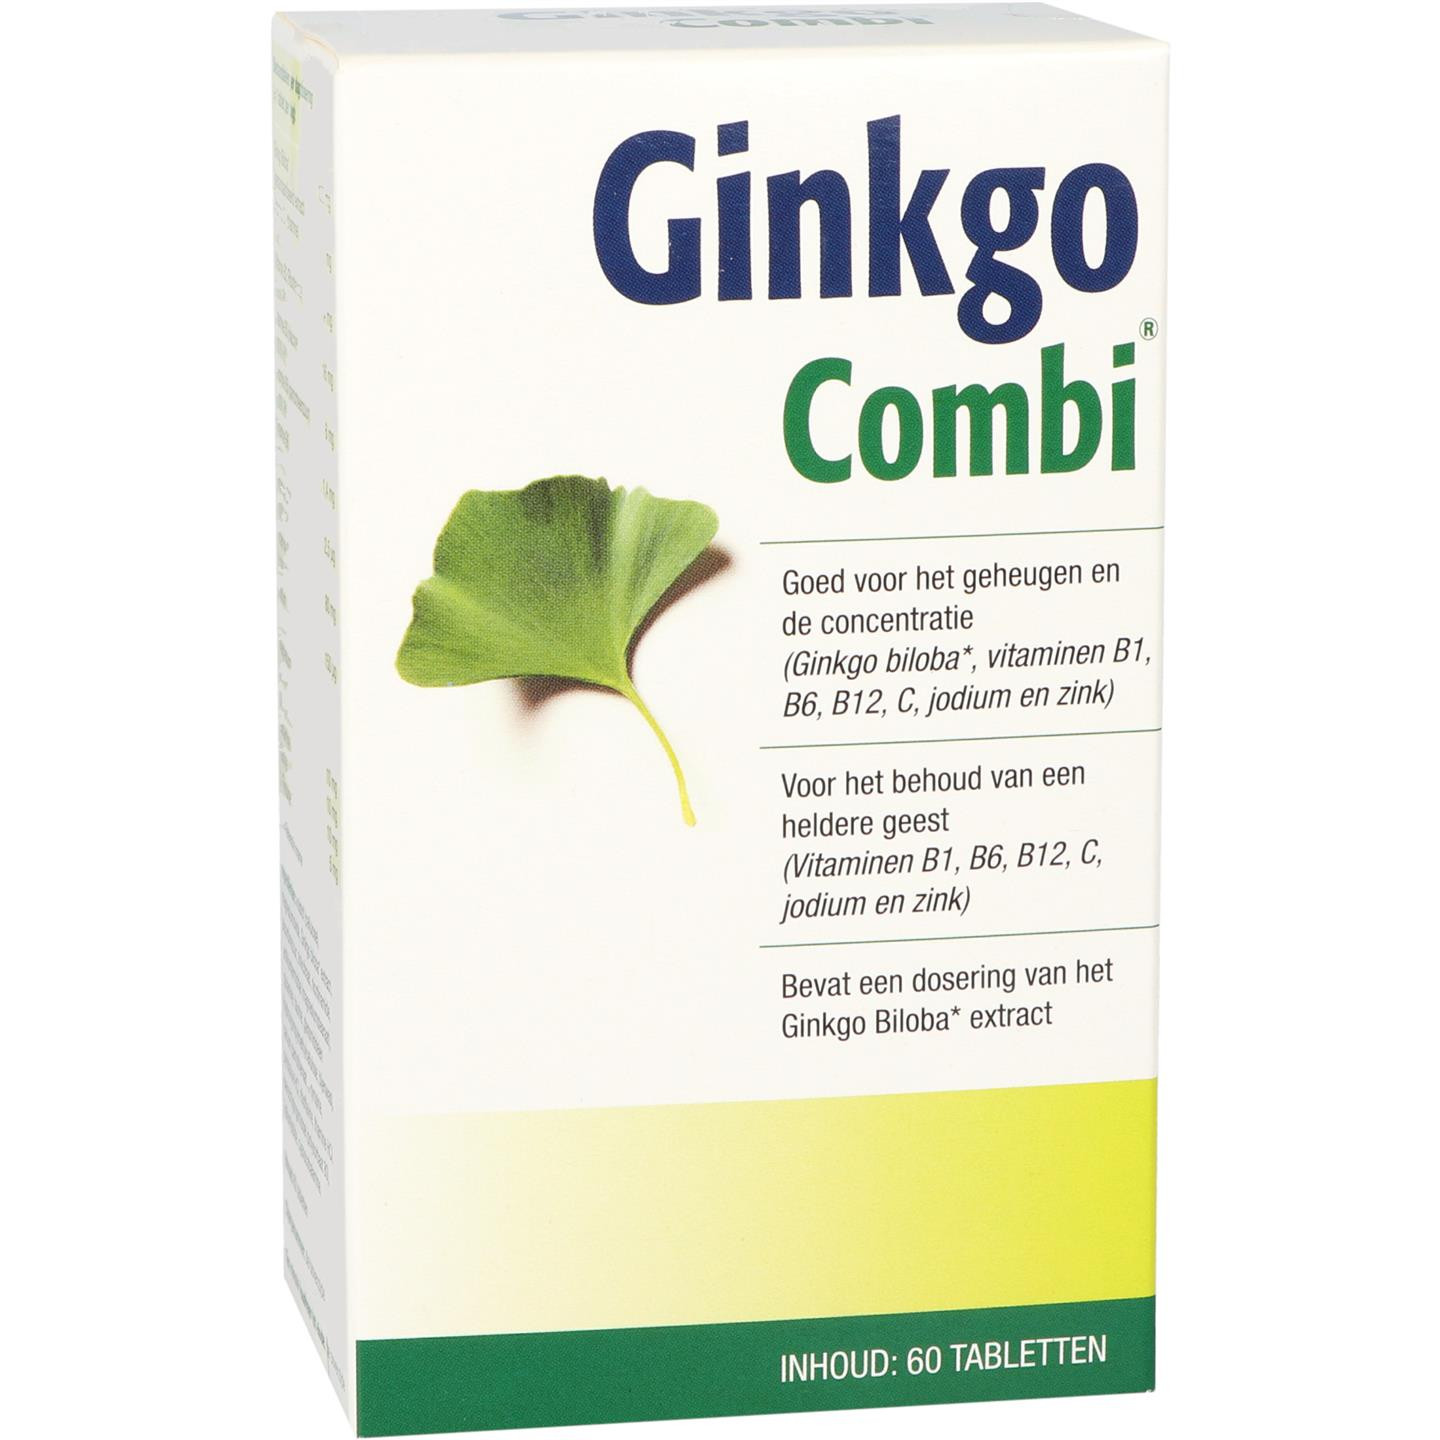 Ginkgo Combi